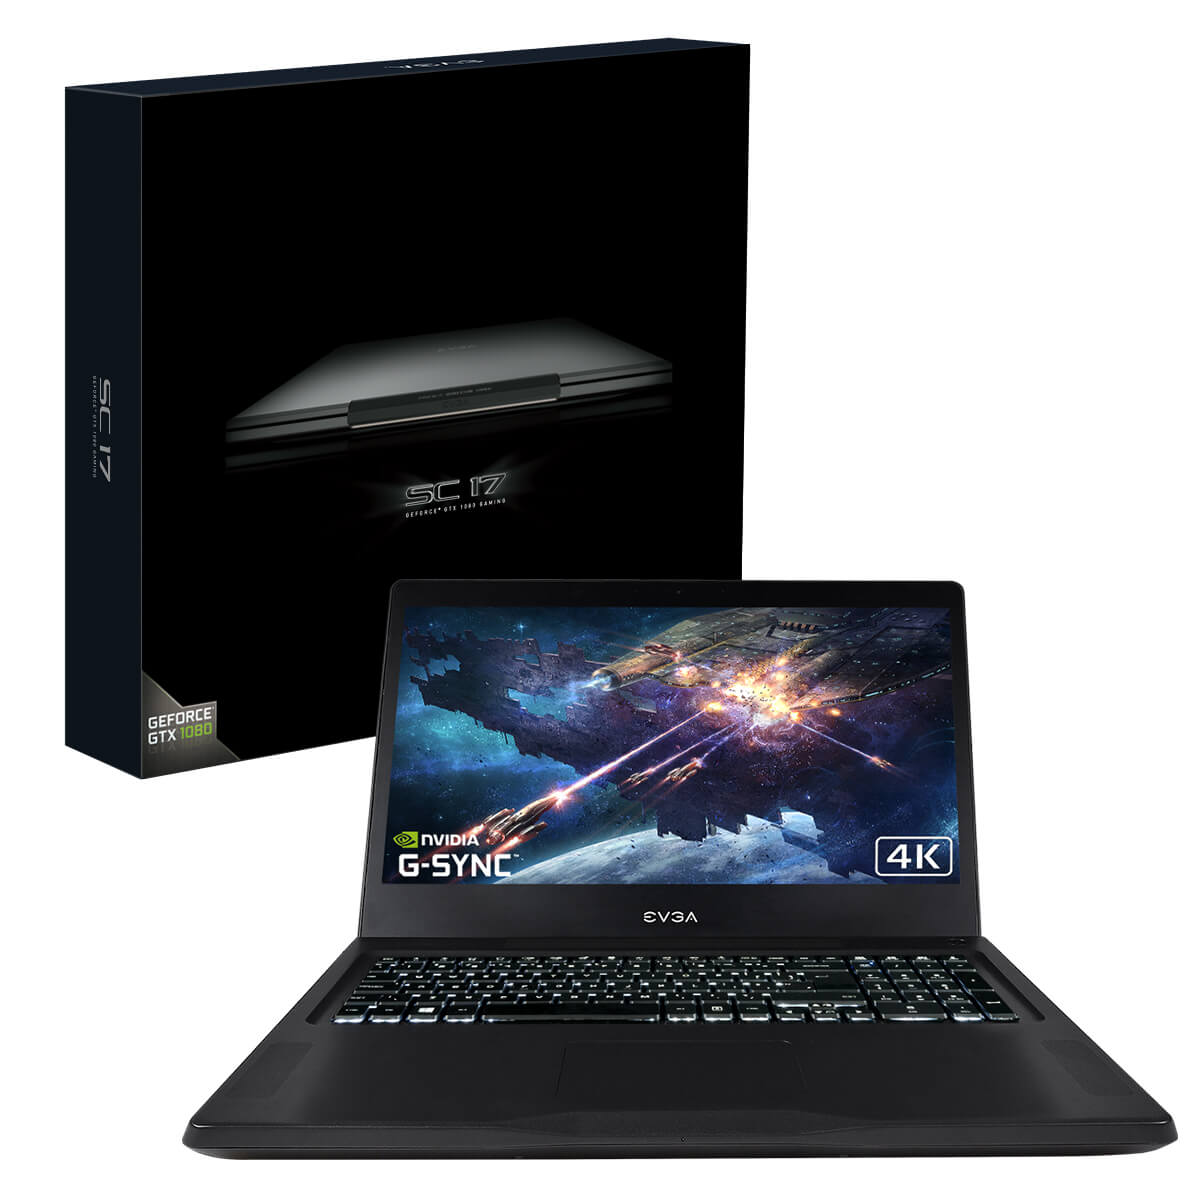 EVGA Launches SC17 1080 Laptop: Core i7-7820HK, GeForce GTX 1080, TB3